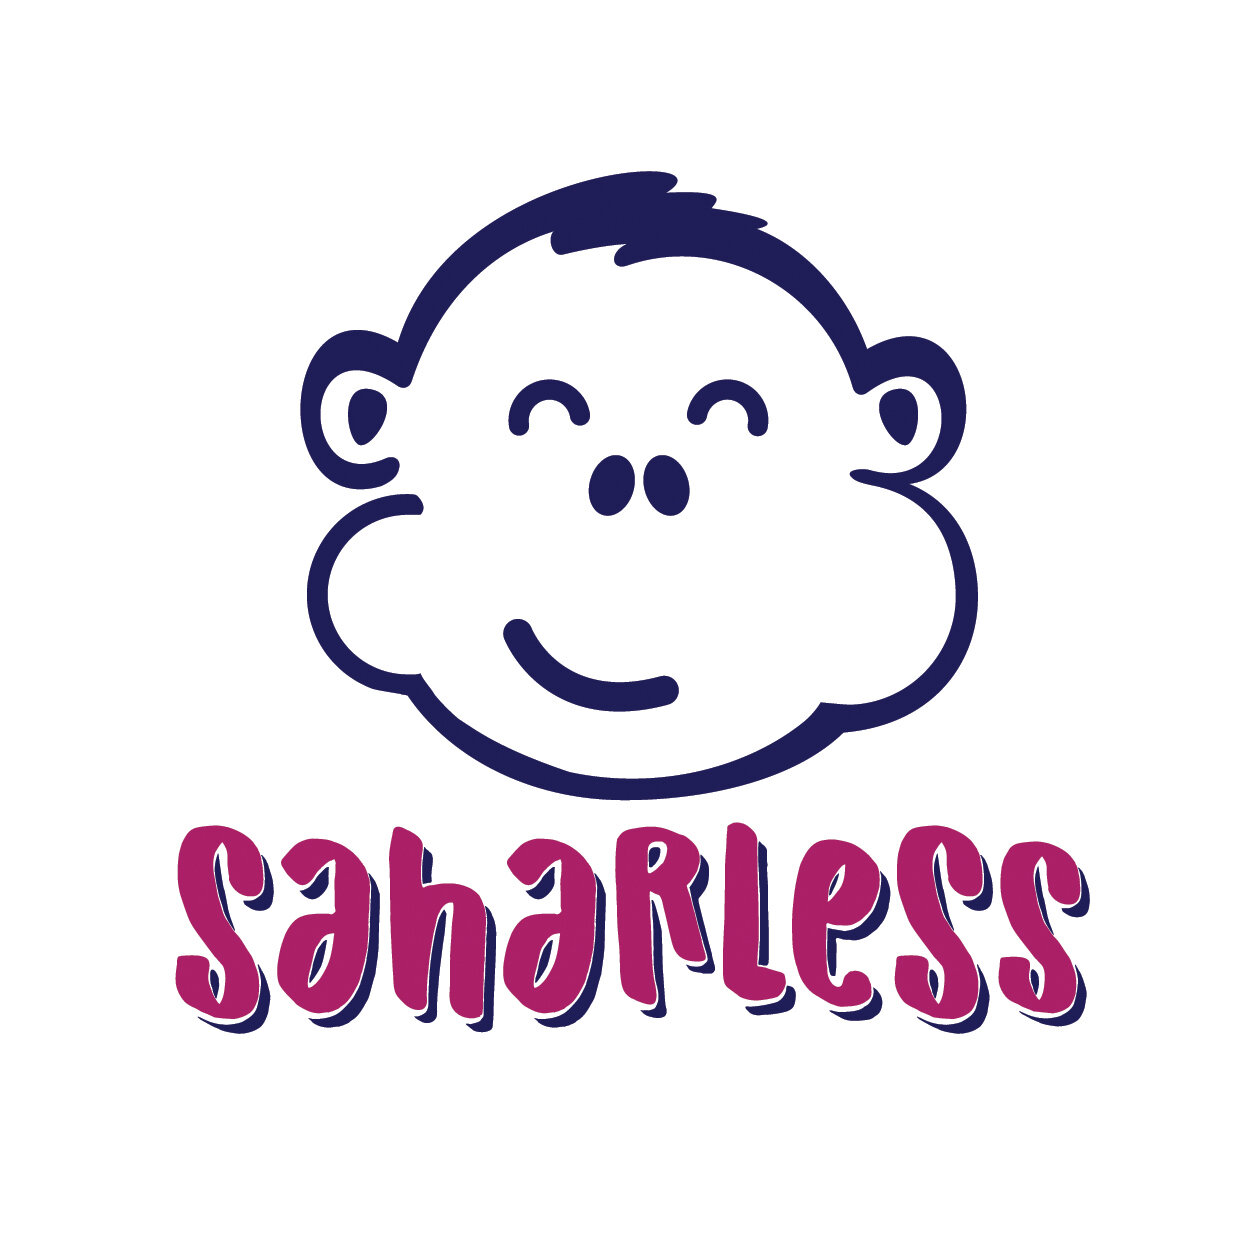 Saharless Subscription Brand Design